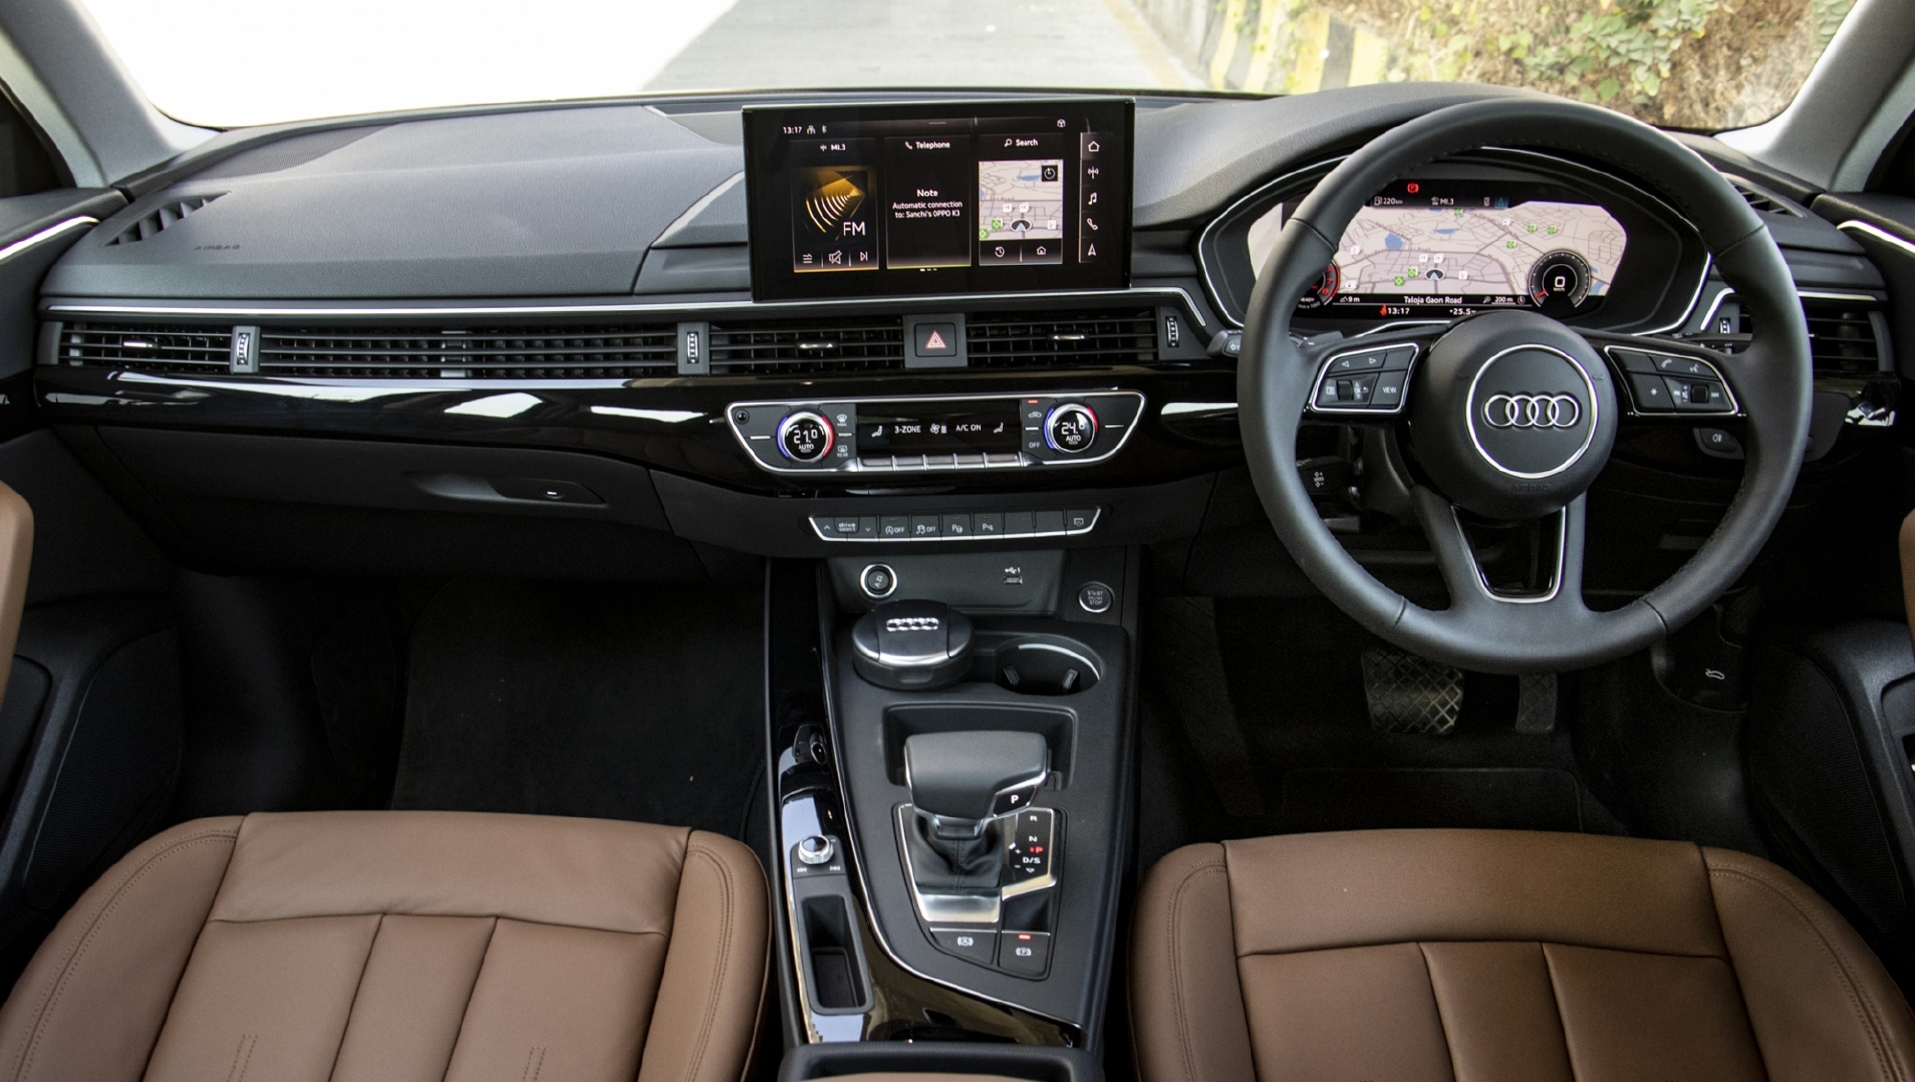 Audi A4 Interior: